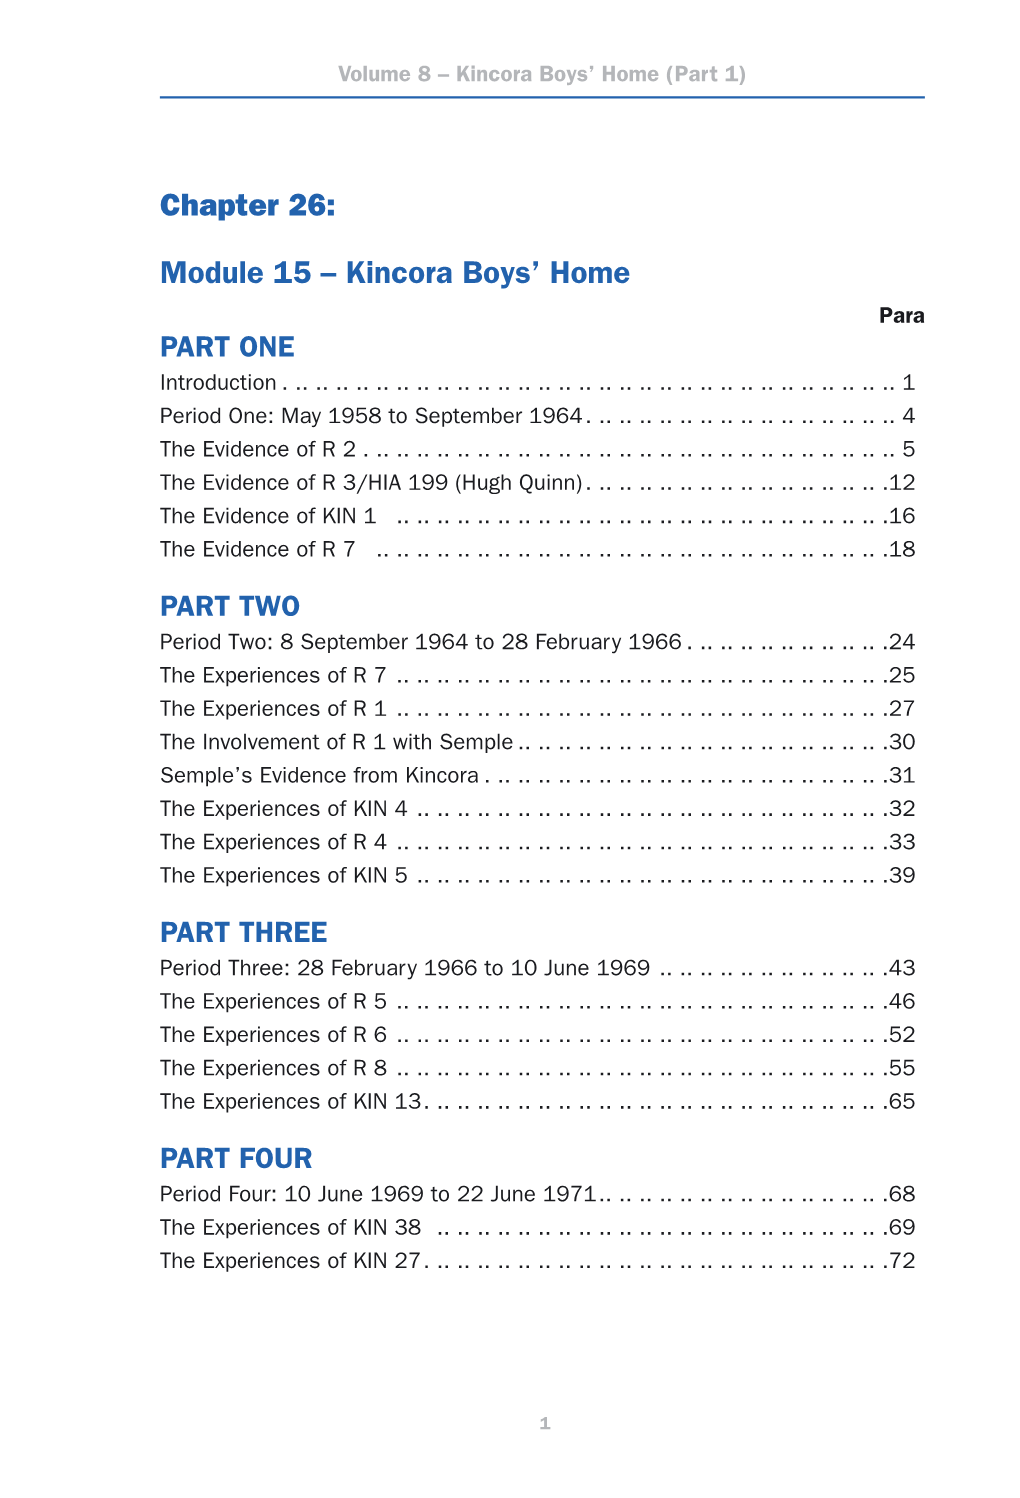 Chapter 26: Module 15 – Kincora Boys' Home